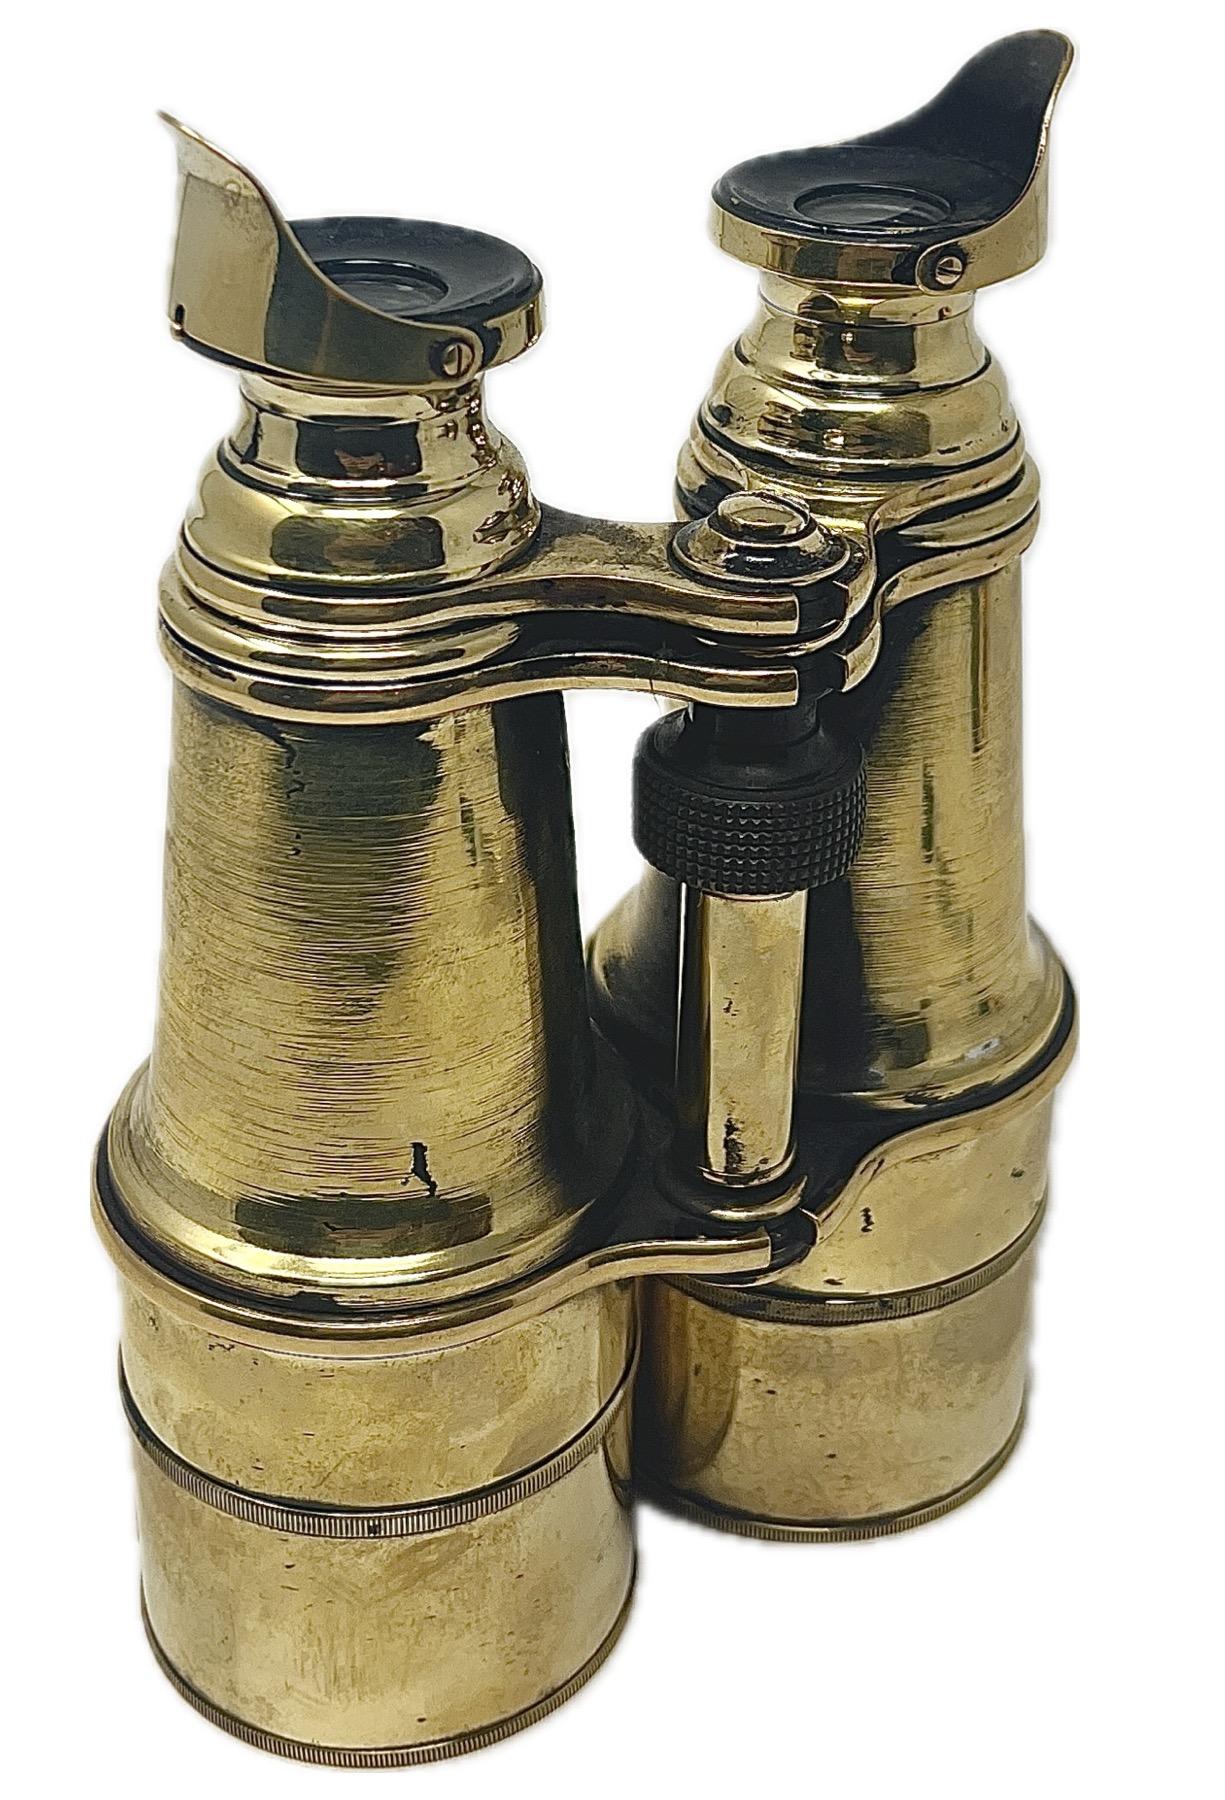 Antique English Brass Binoculars, Circa 1910.
